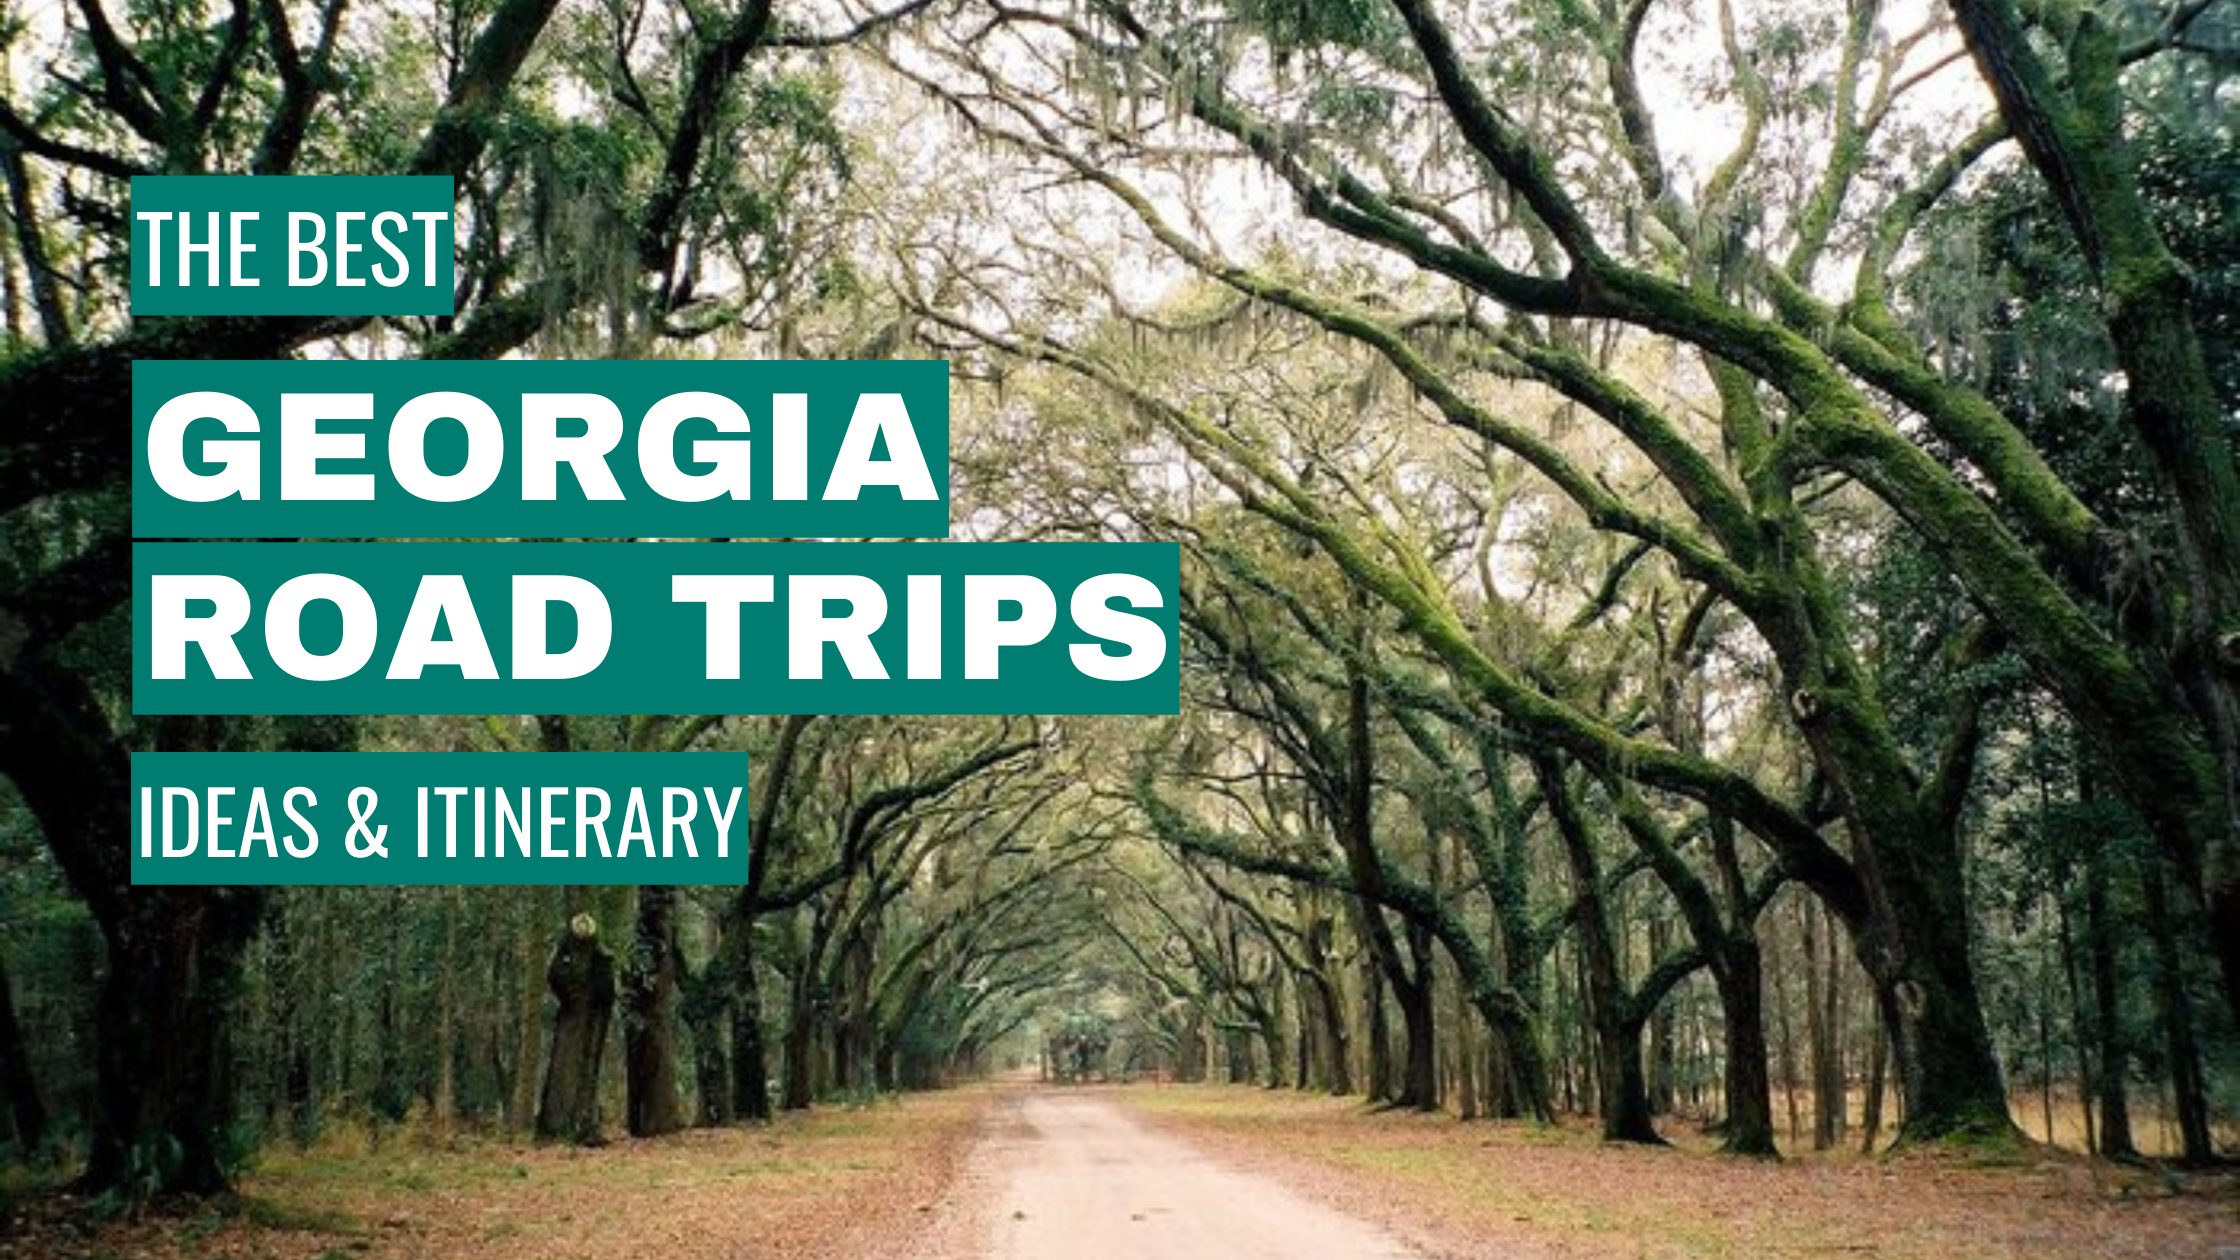 Georgia Road Trip Ideas: 11 Best Road Trips + Itinerary